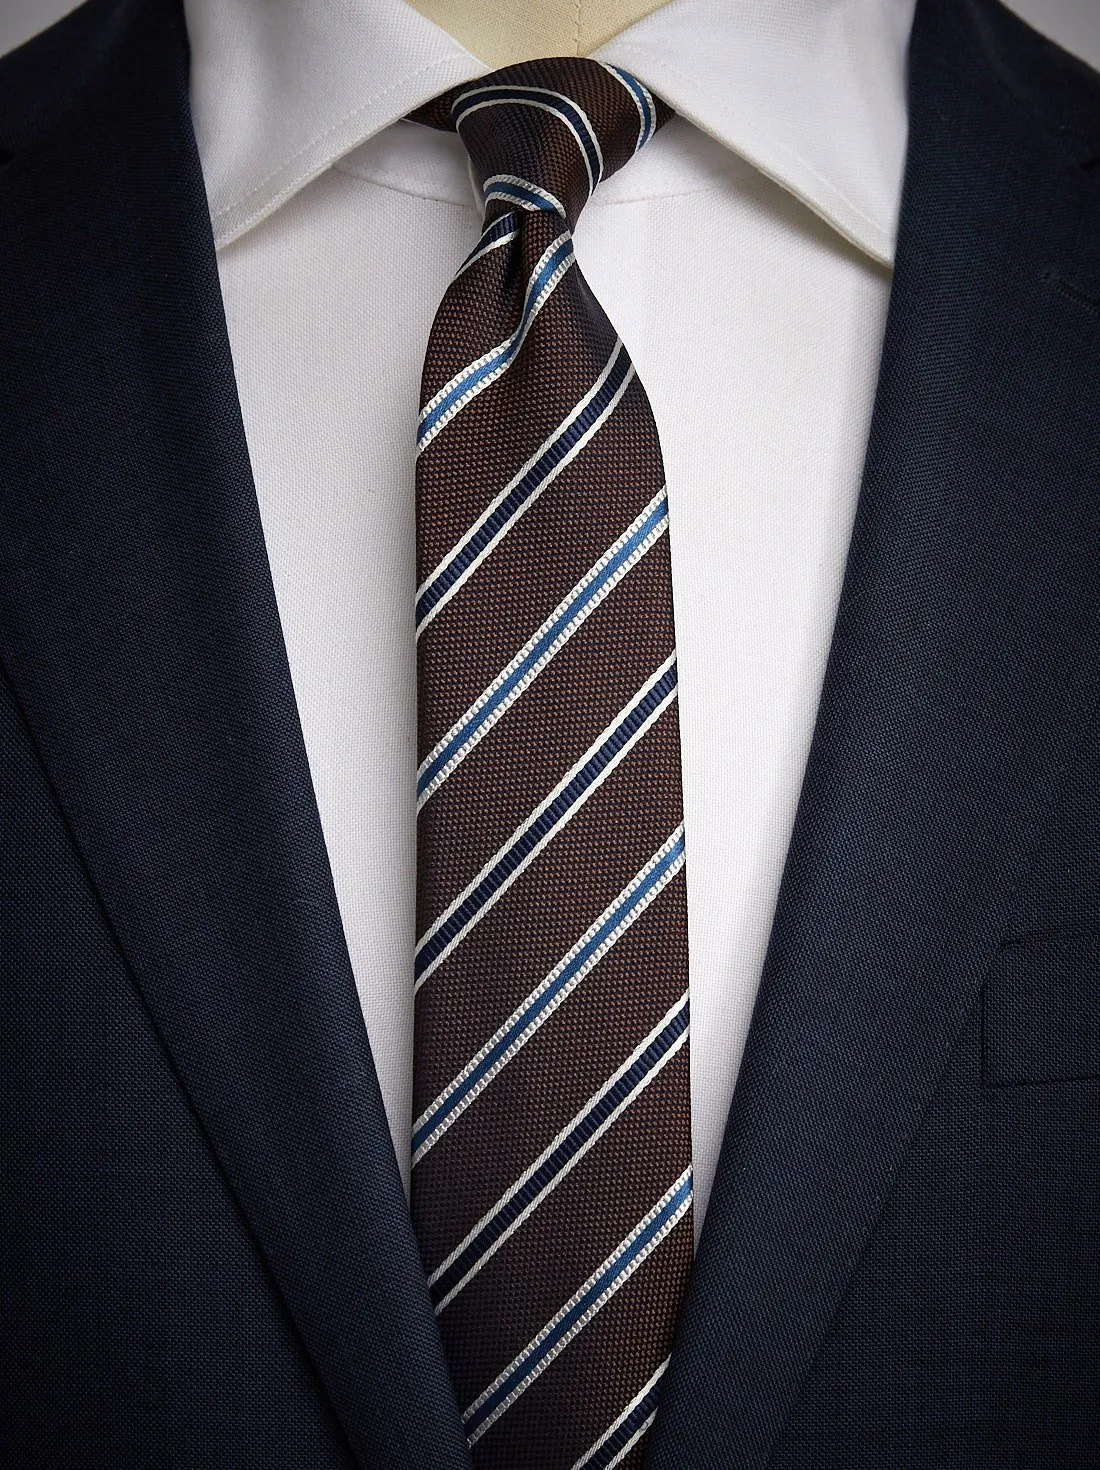 Brown & Blue Tie Striped